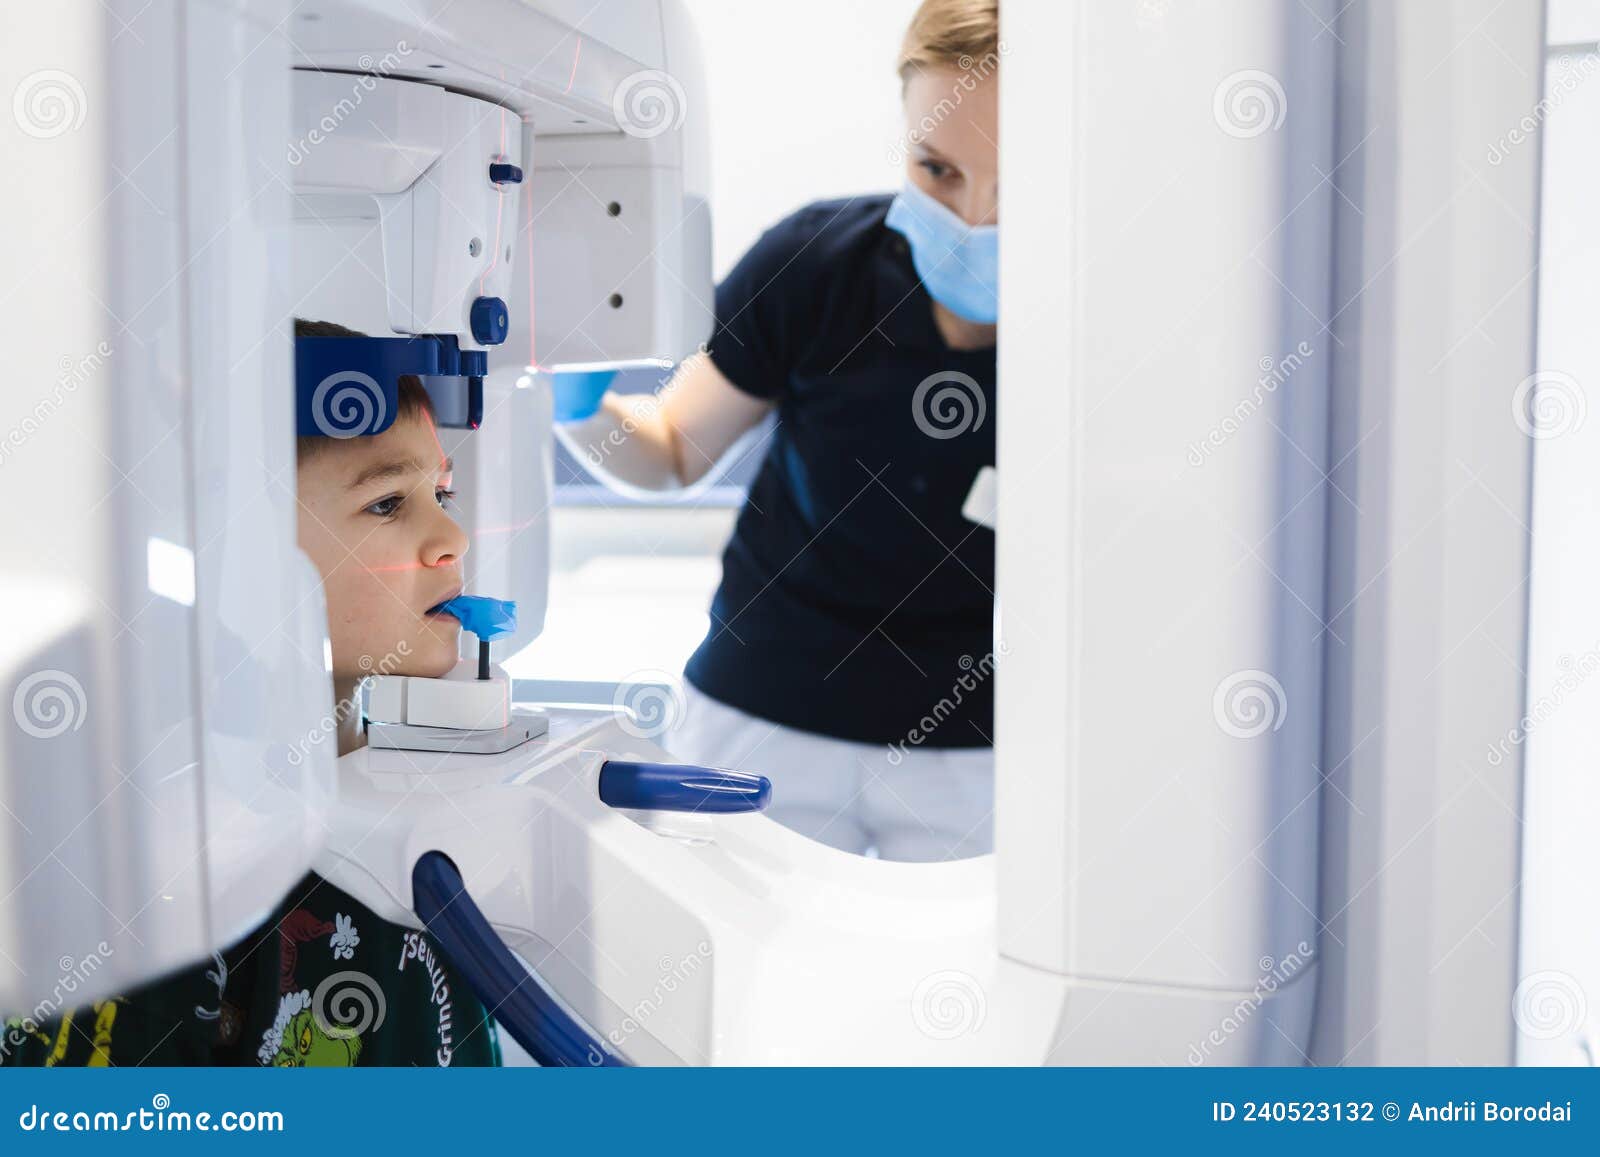 radiographer taking panoramic teeth radiography to a little boy using modern x-ray machine.